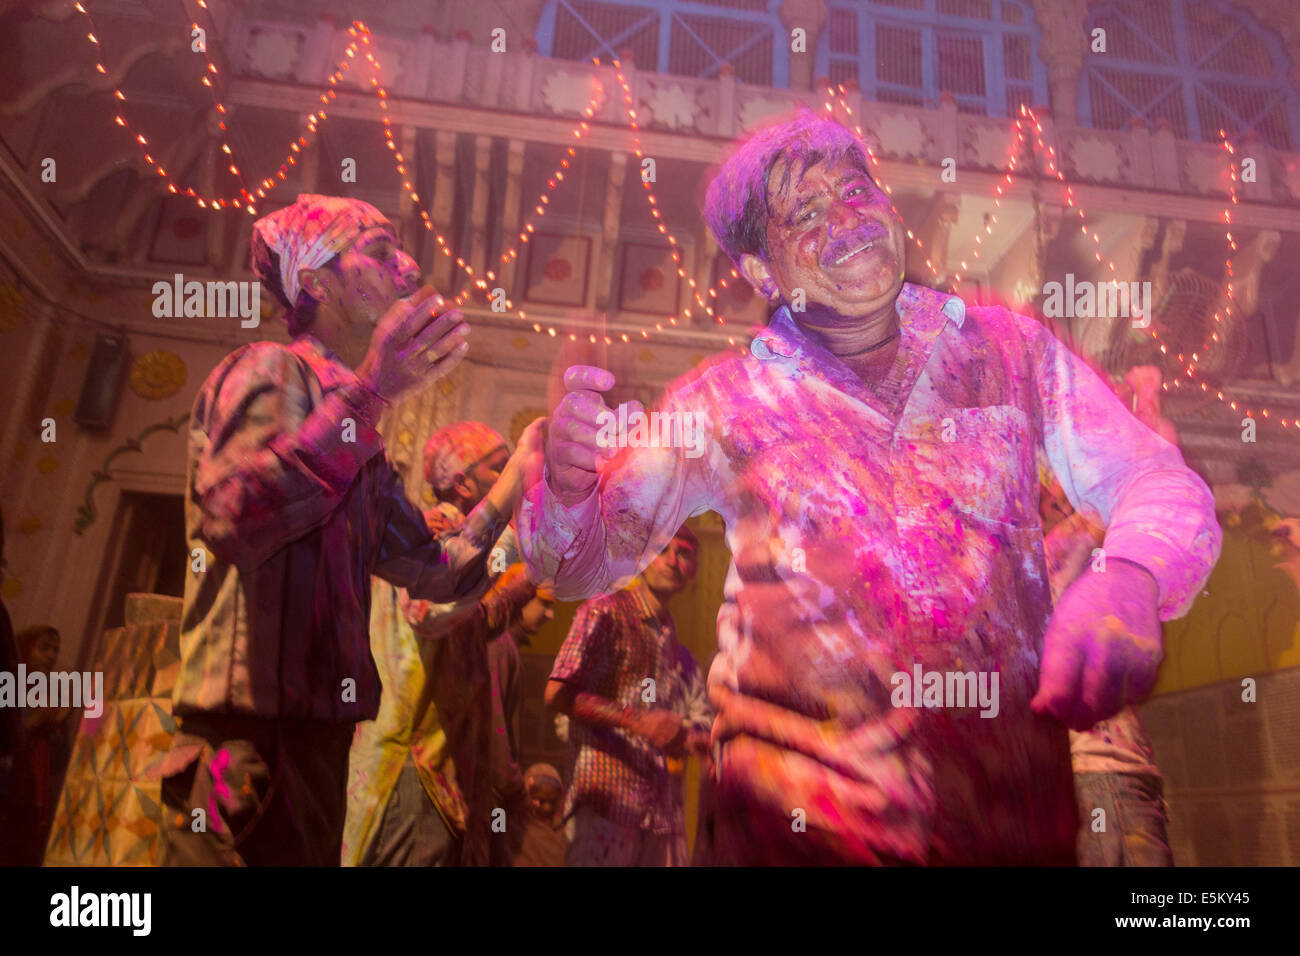 Devotees covered in coloured powder celebrating, Holi festival, Banke Bihari Temple, Vrindavan, Uttar Pradesh, India Stock Photo